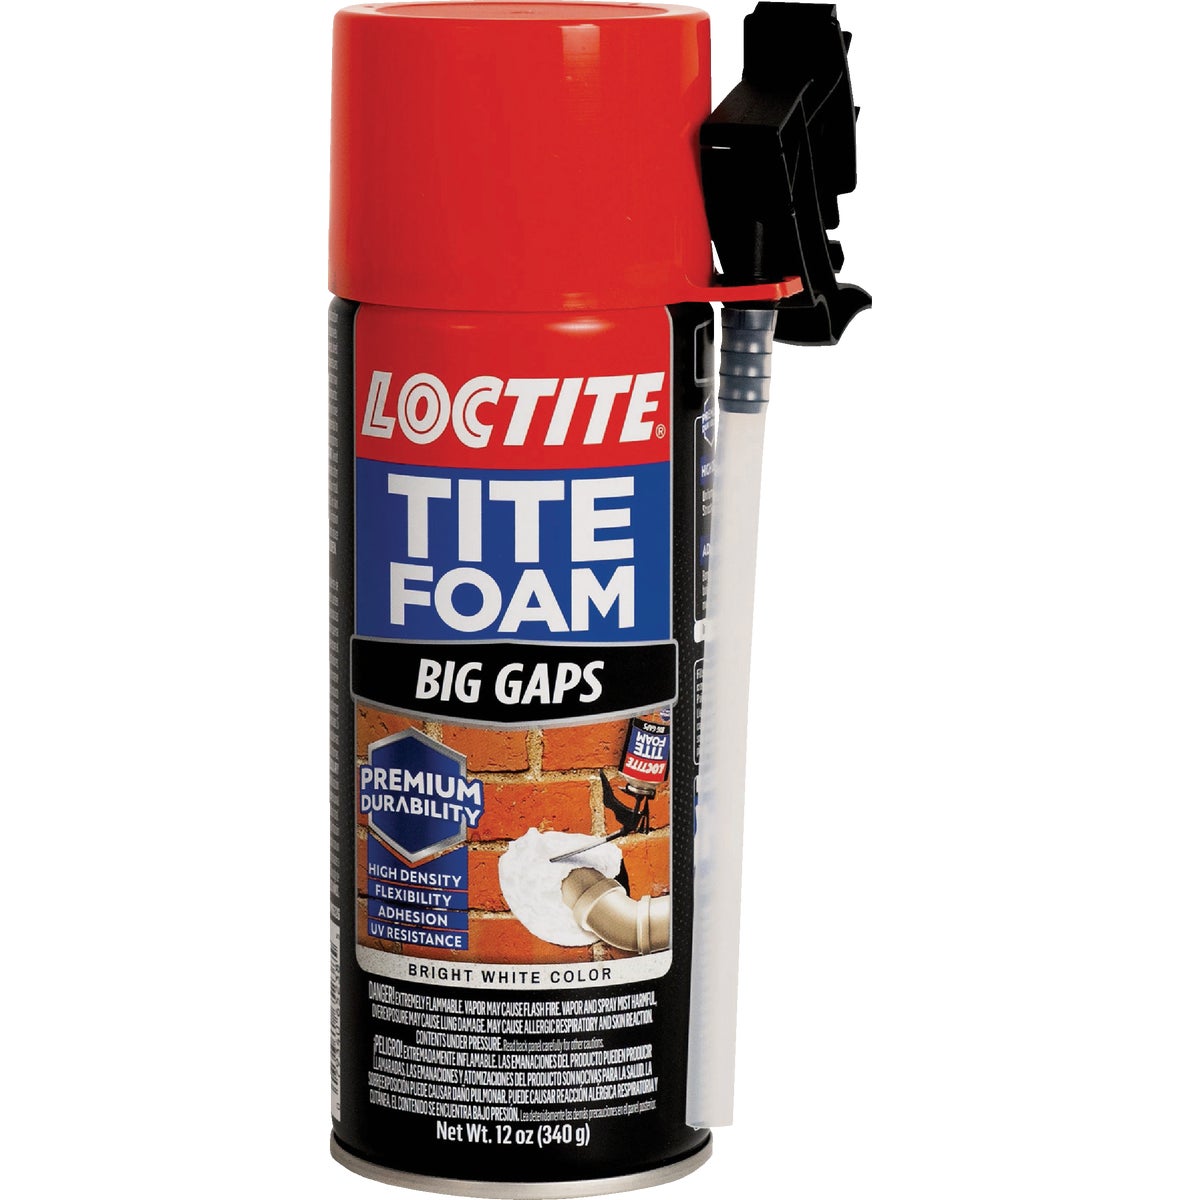 Loctite Tite Foam 12 Oz. Big Gaps Foam Sealant